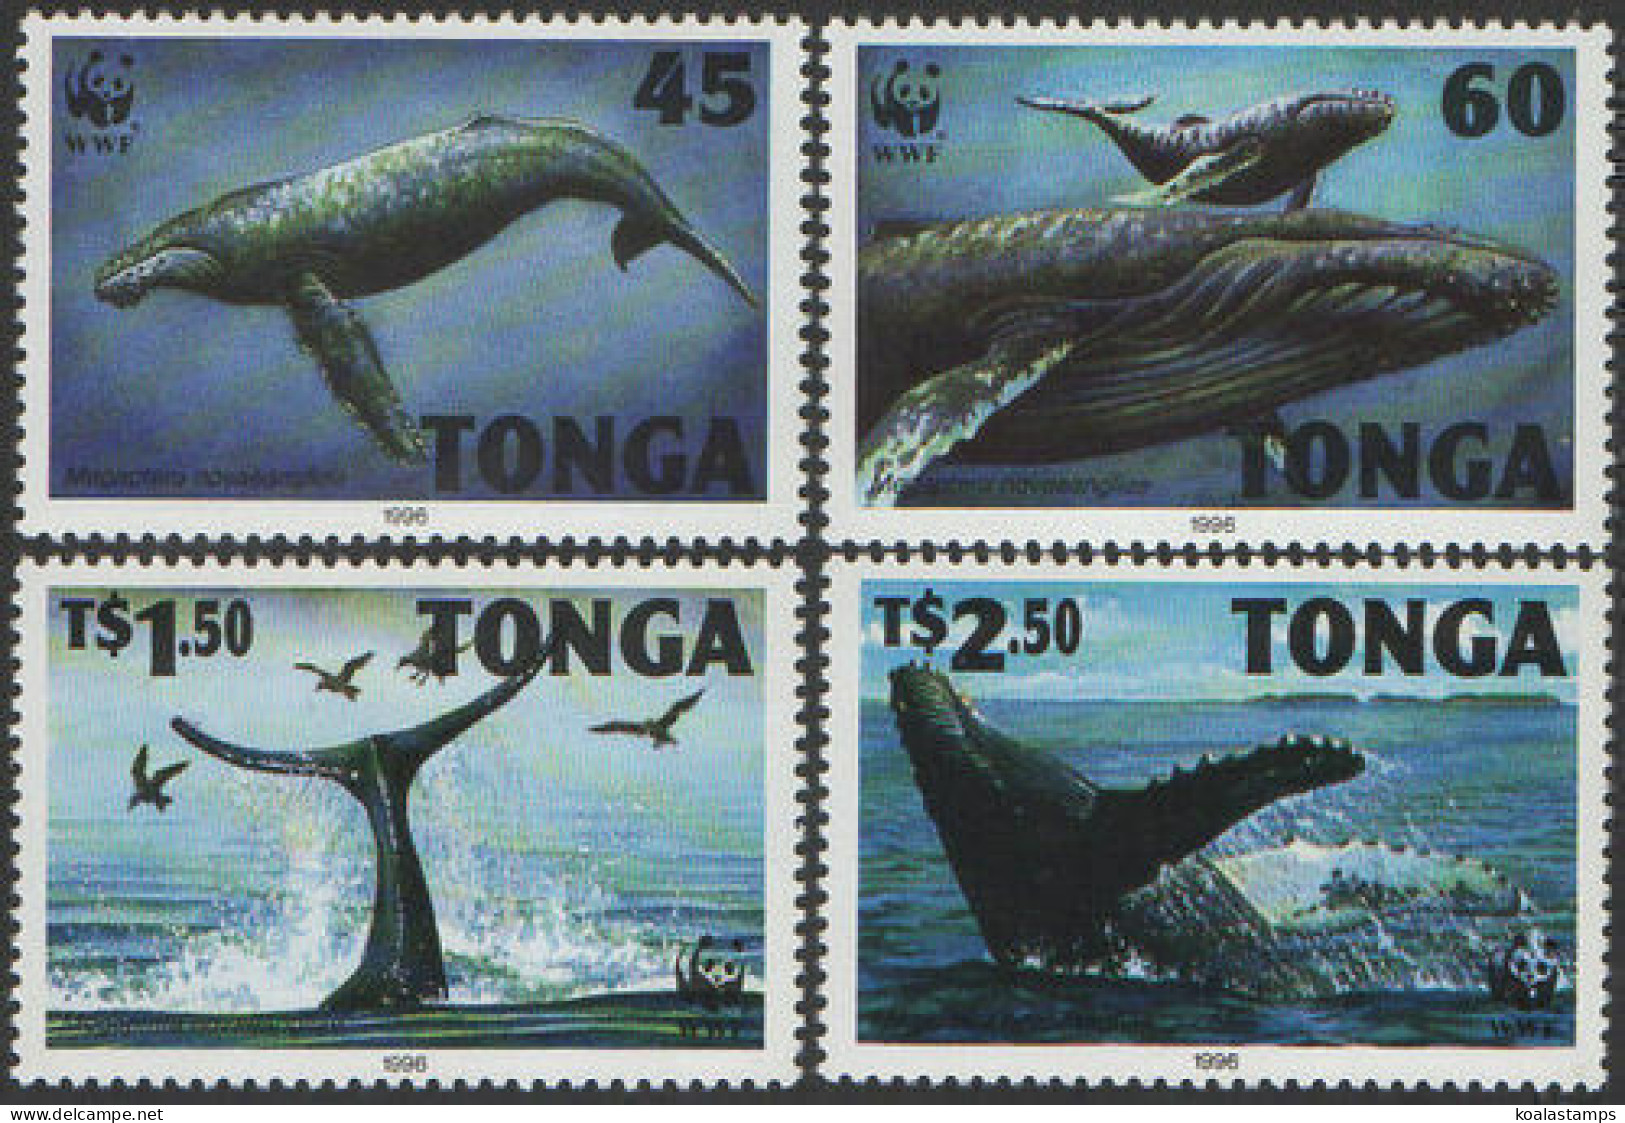 Tonga 1996 SG1337-1340 Whales Endangered Species Set MNH - Tonga (1970-...)